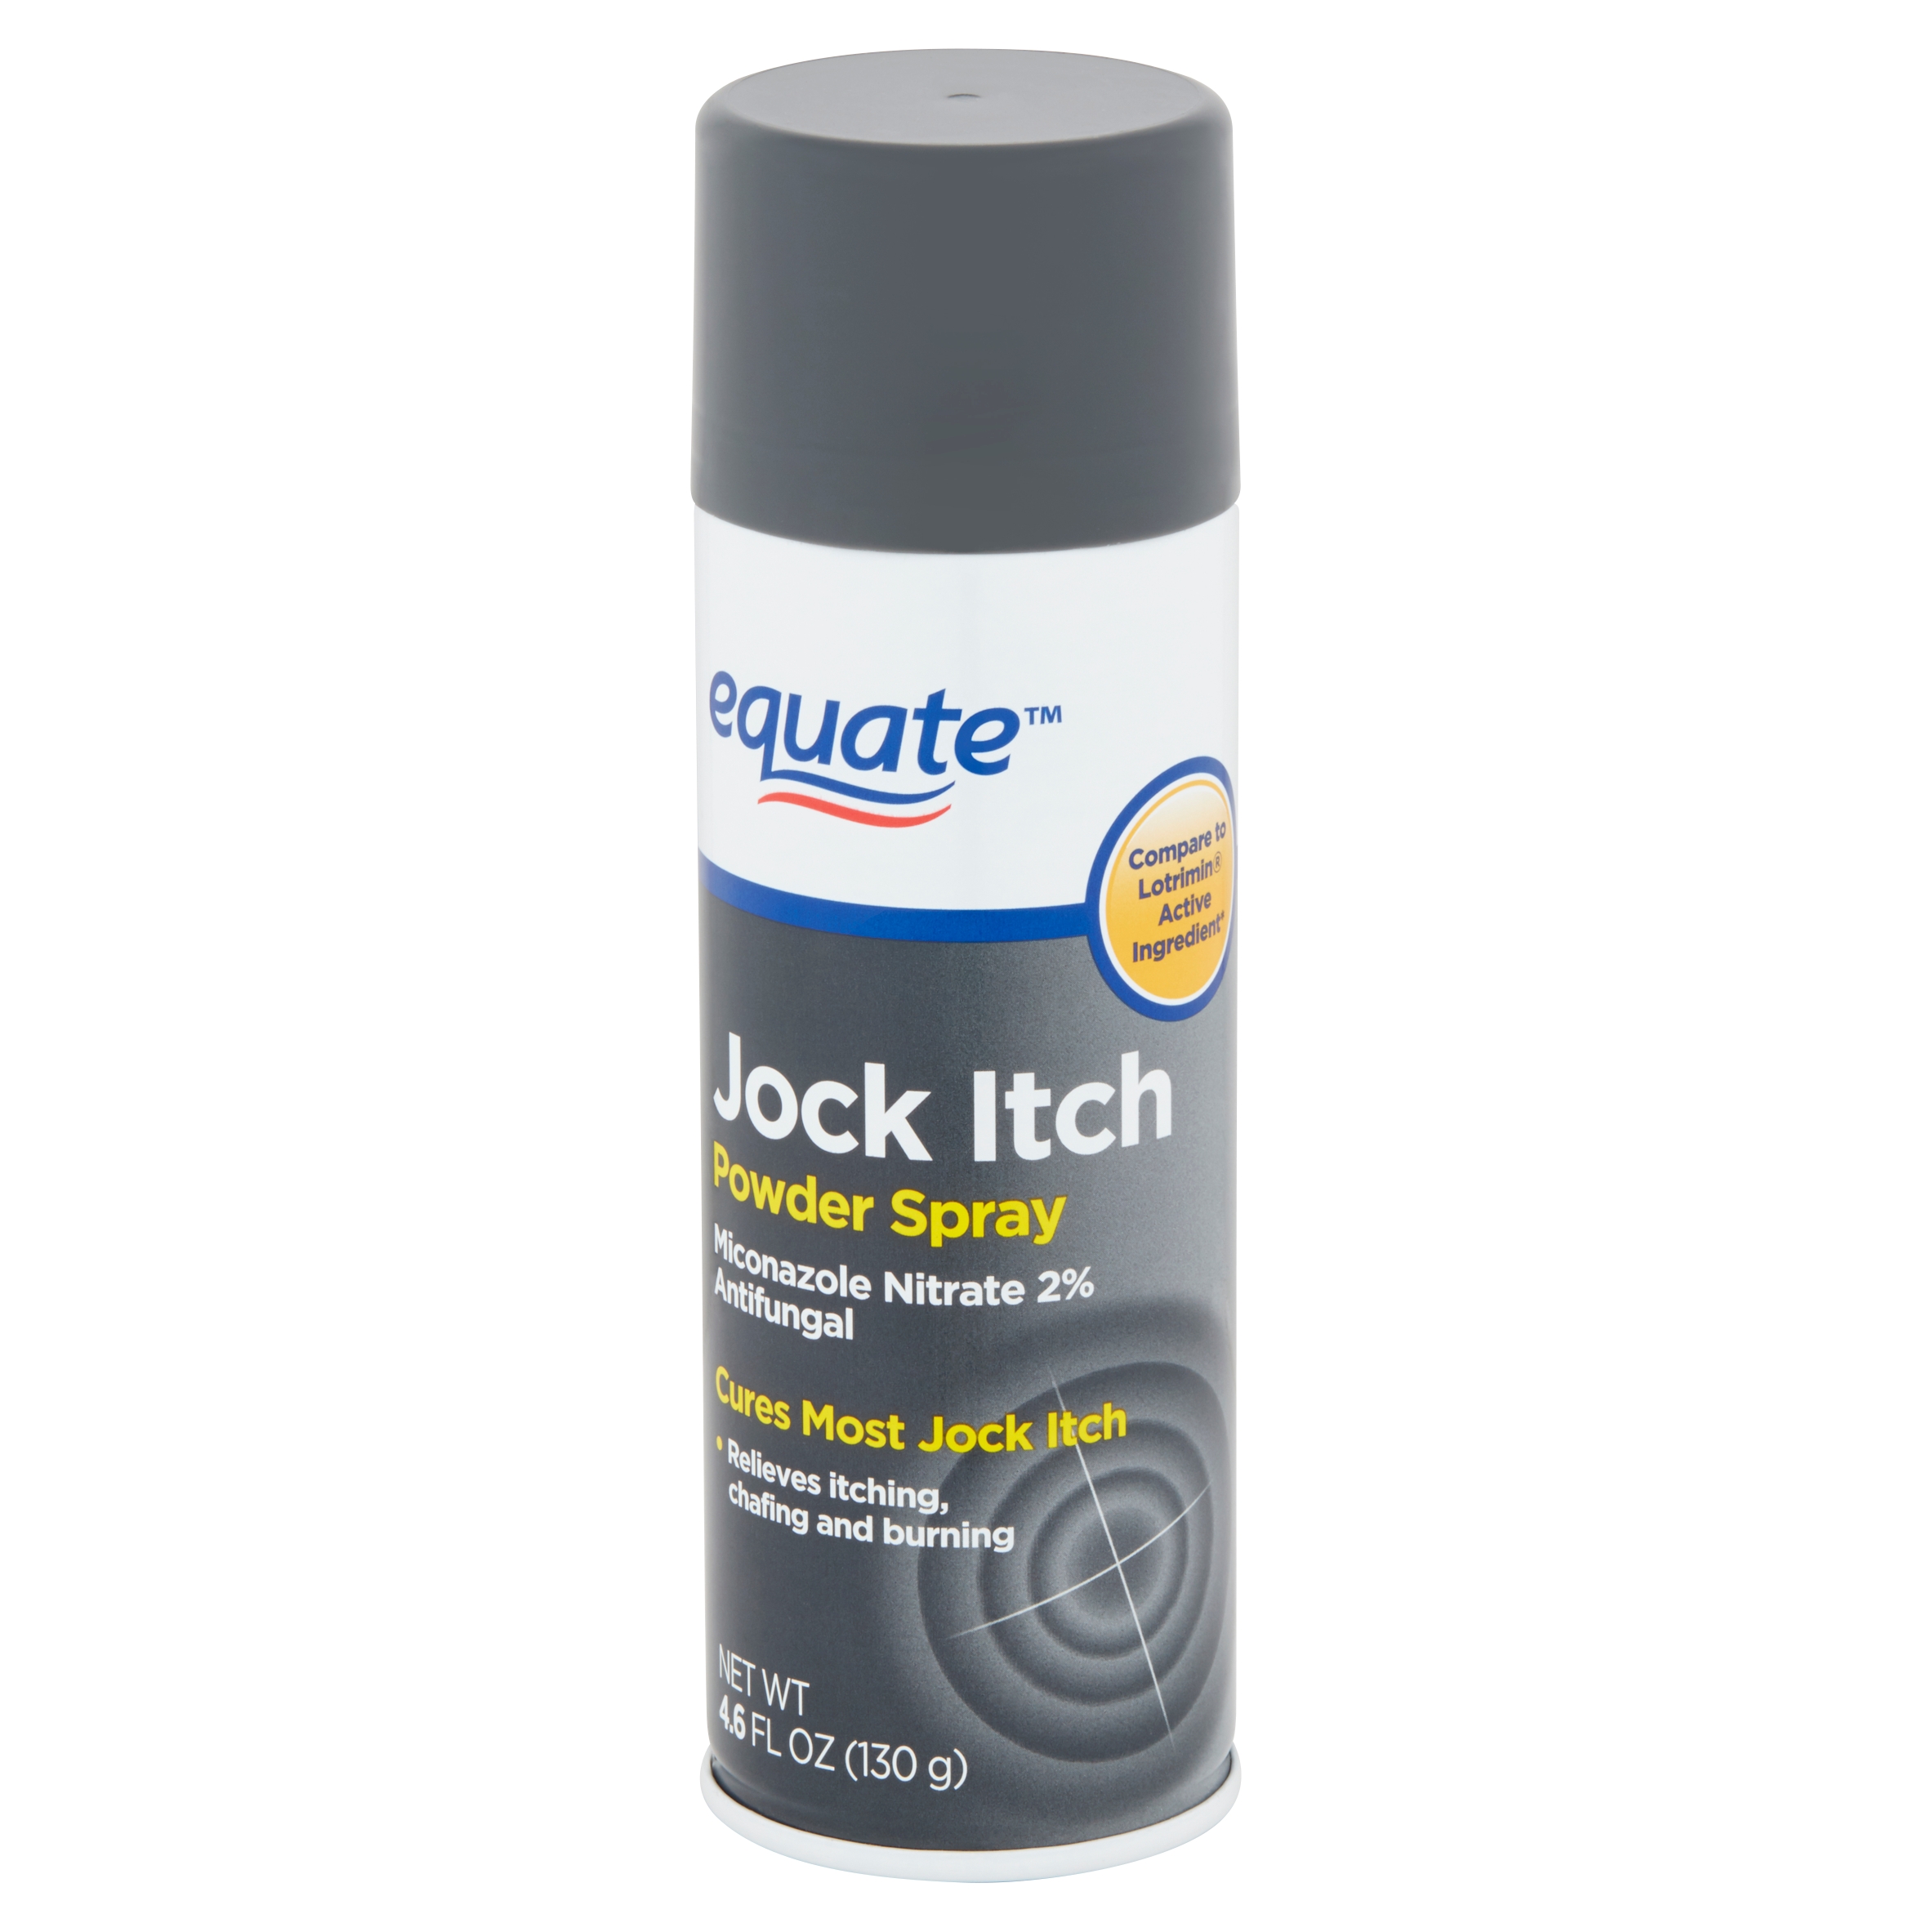 Equate Jock Itch Powder Spray, 4.6 fl oz - image 1 of 10